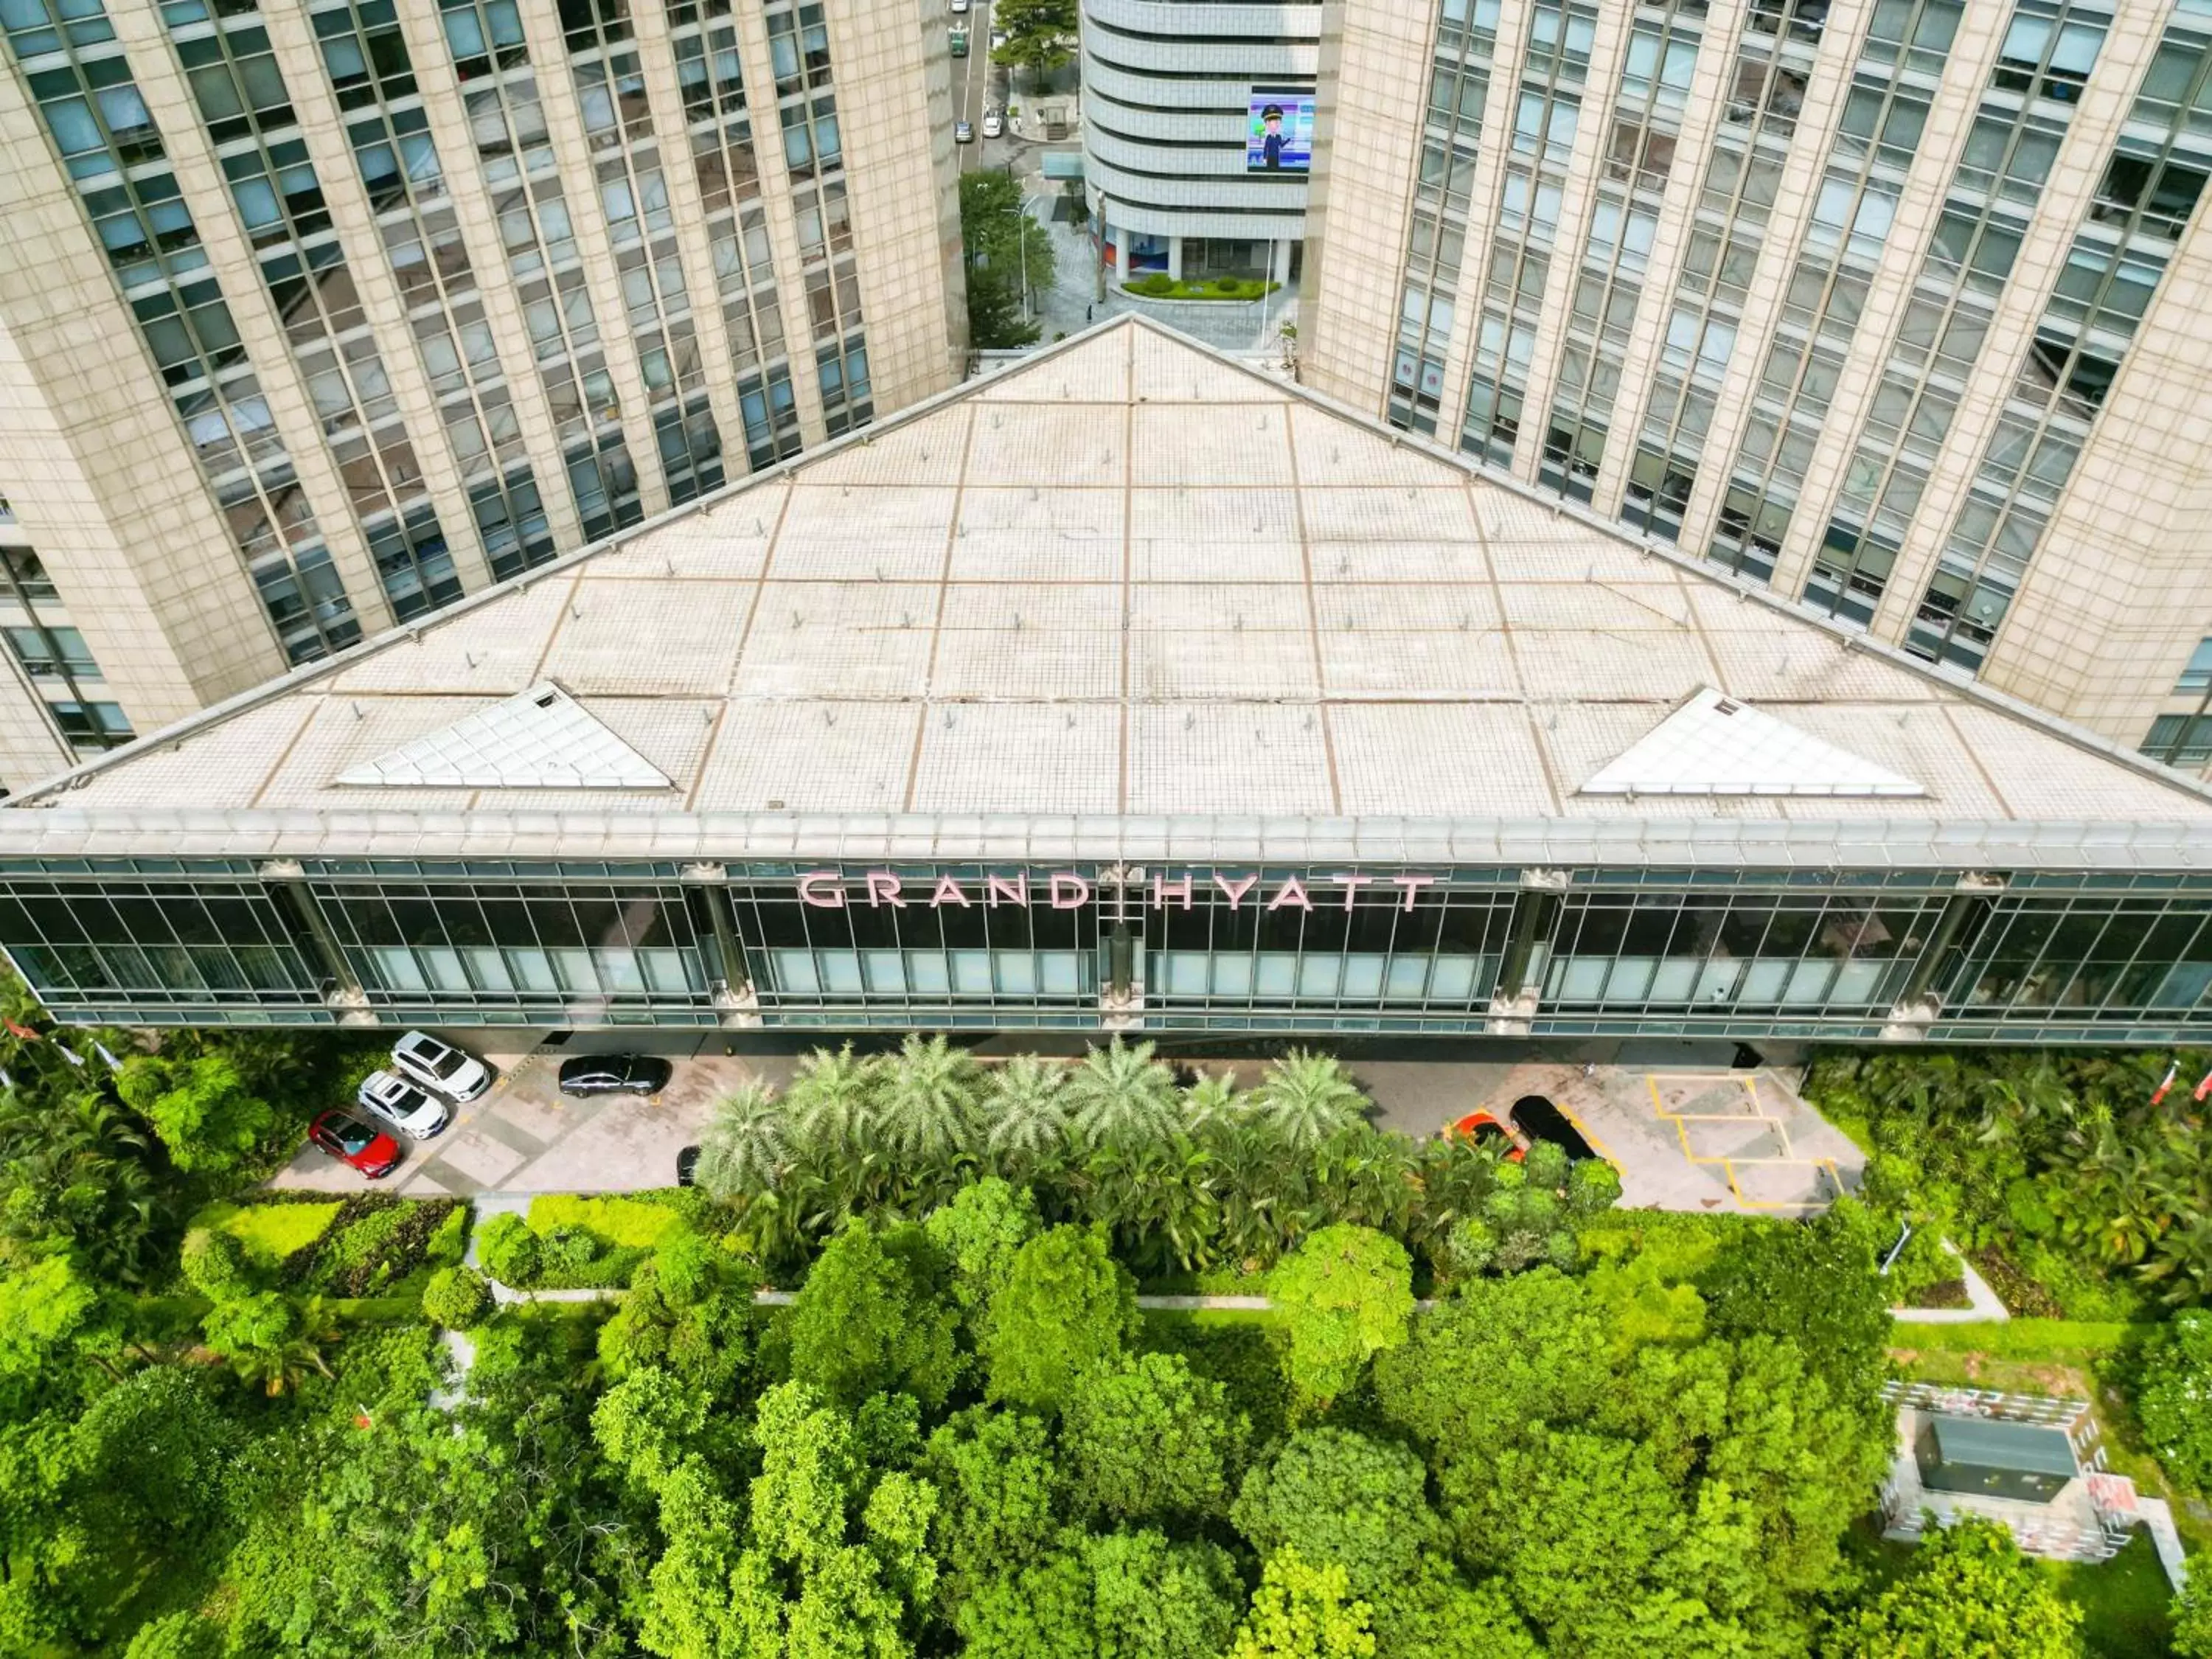 Property building in Grand Hyatt Guangzhou- Free Shuttle Bus to Canton Fair Complex during Canton Fair period